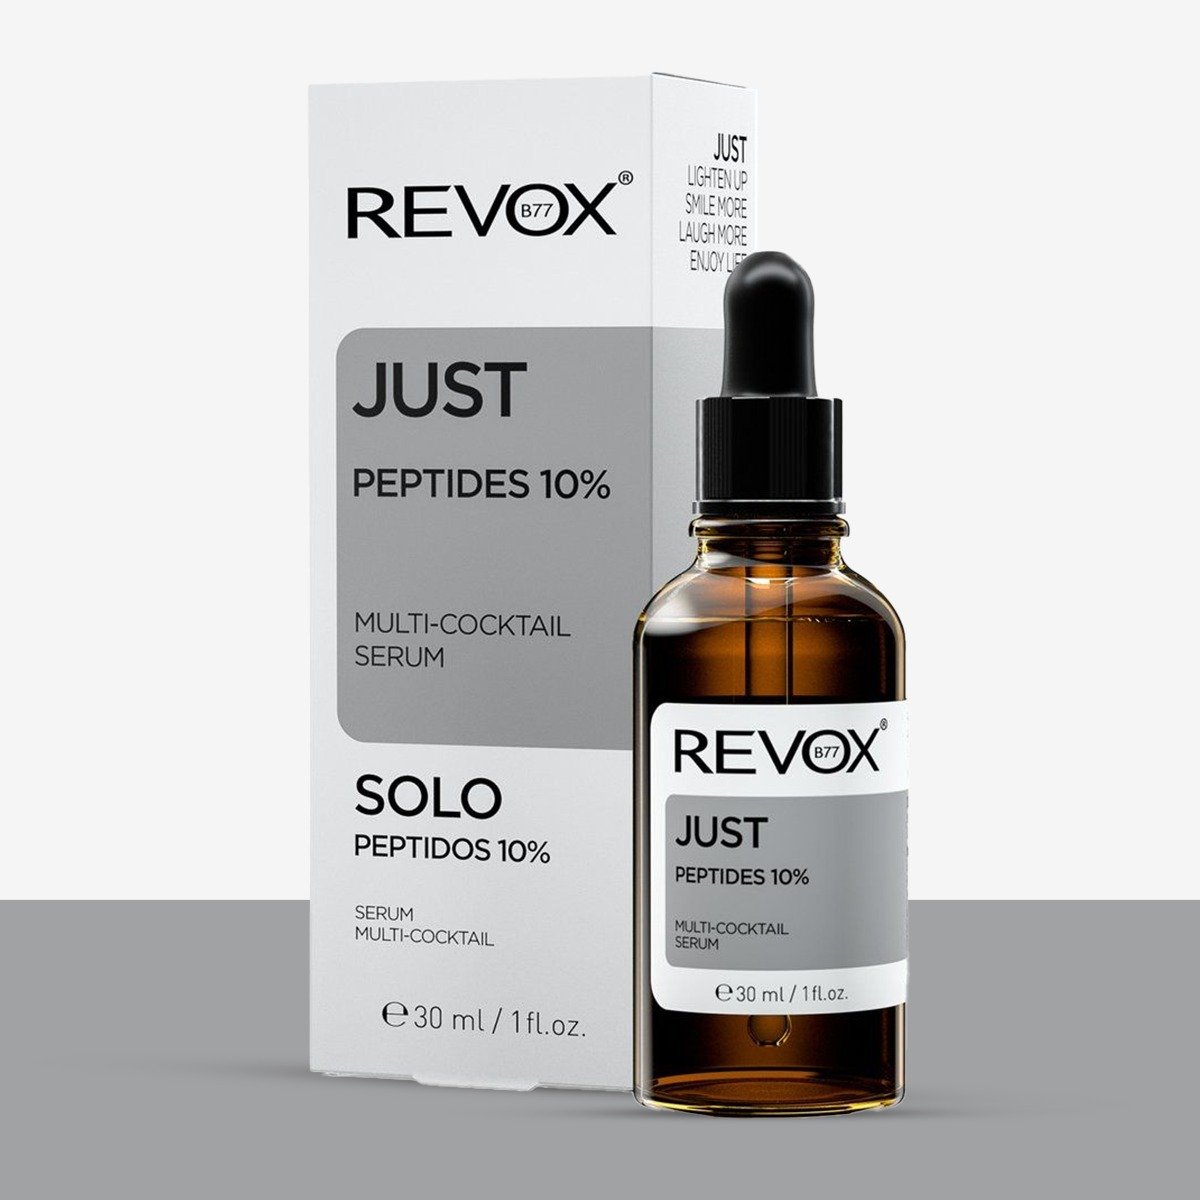 Revox Just Peptides 10% Multi Cocktail Serum